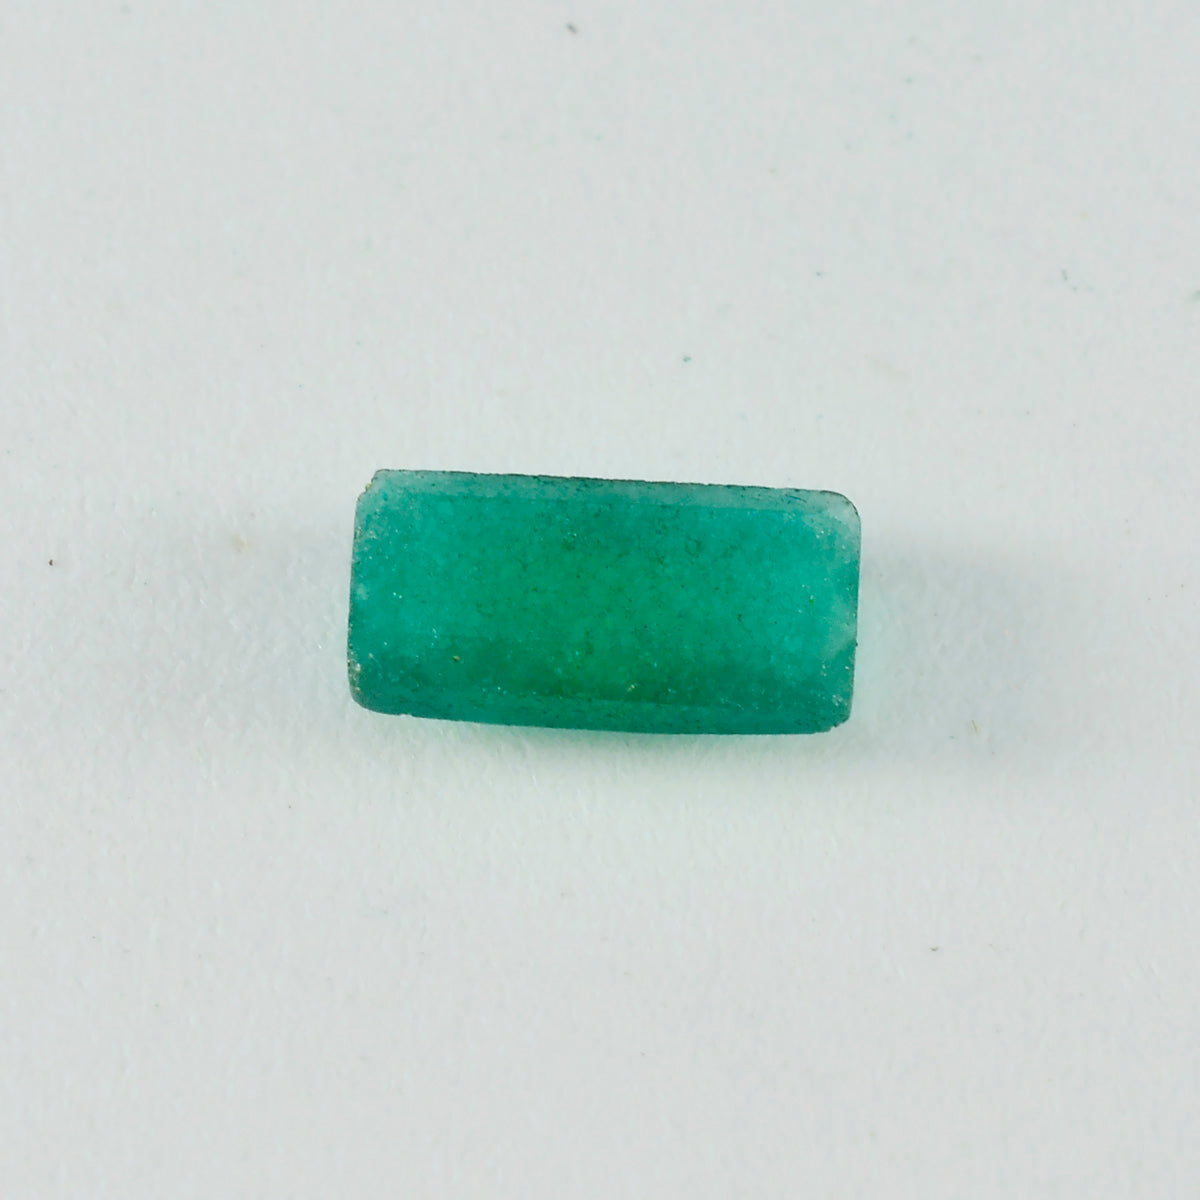 riyogems 1pc リアル グリーン ジャスパー ファセット 8x16 mm バゲット形状 a+1 品質ルース宝石